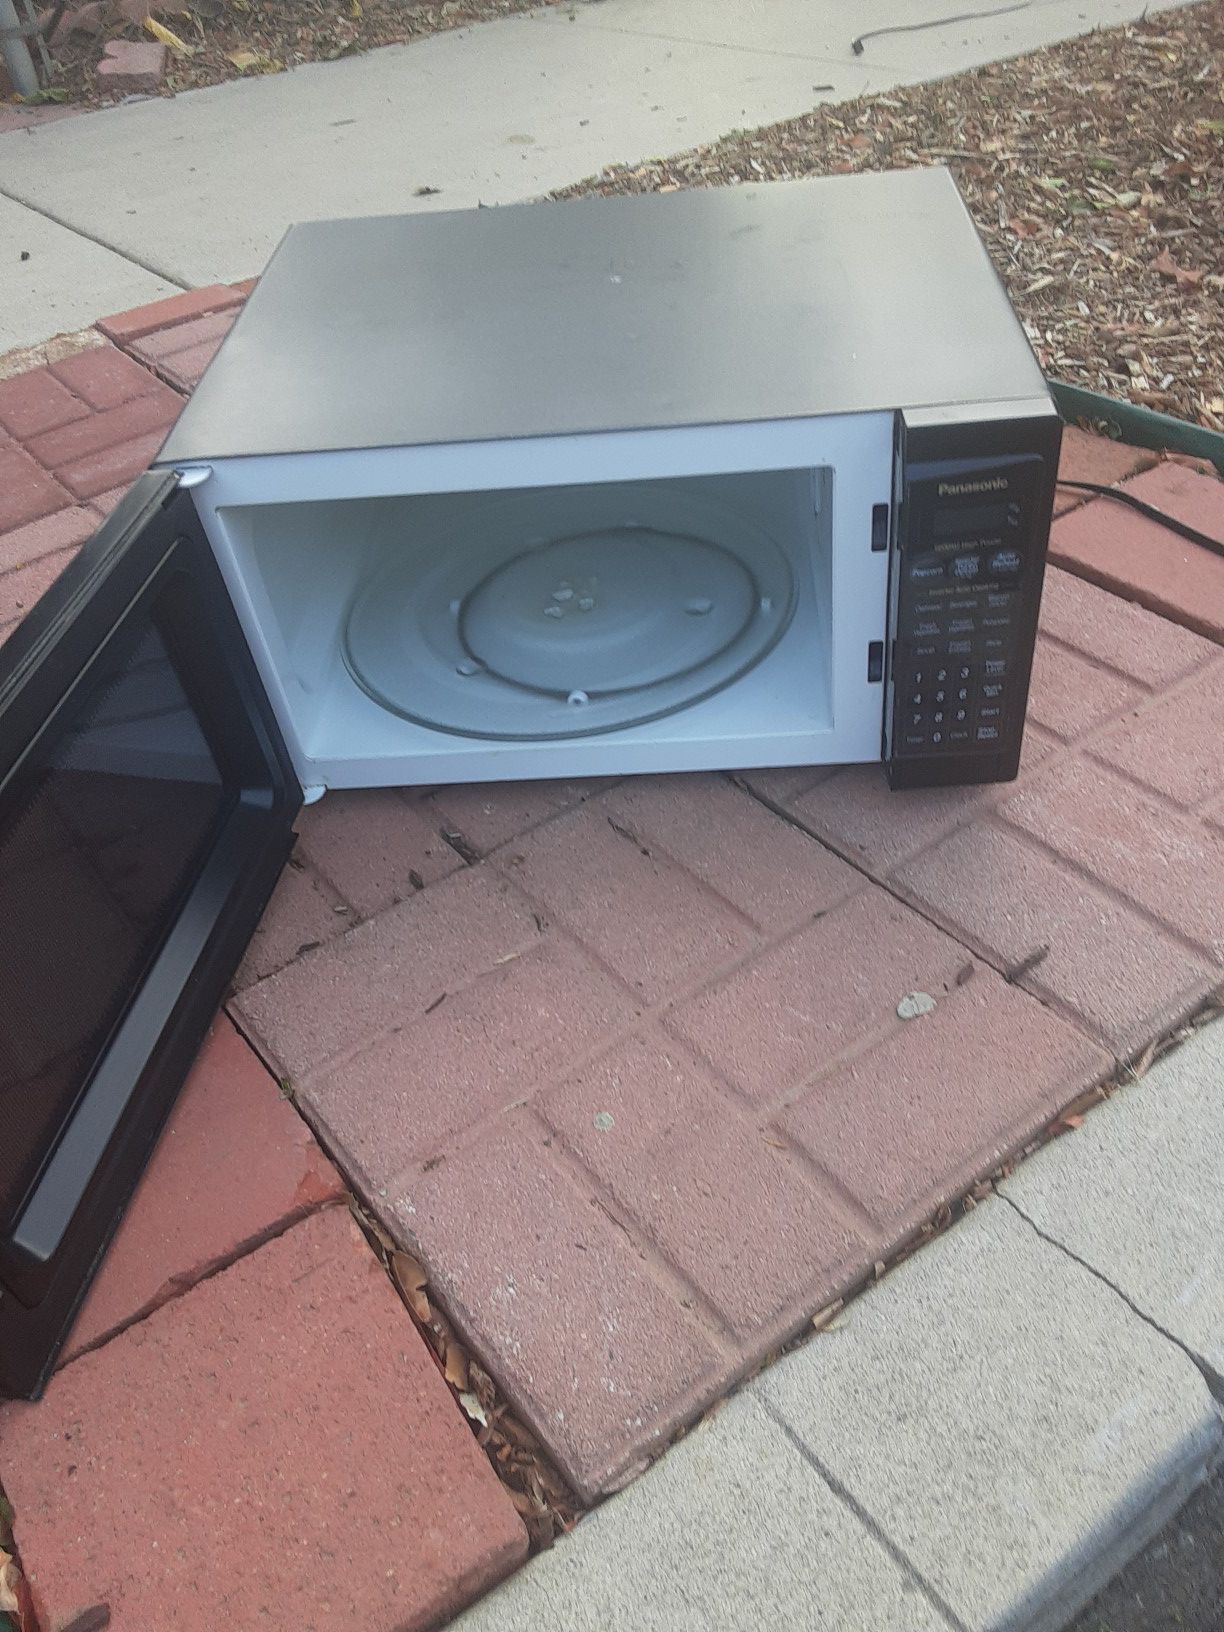 Panasonic inverter microwave oven